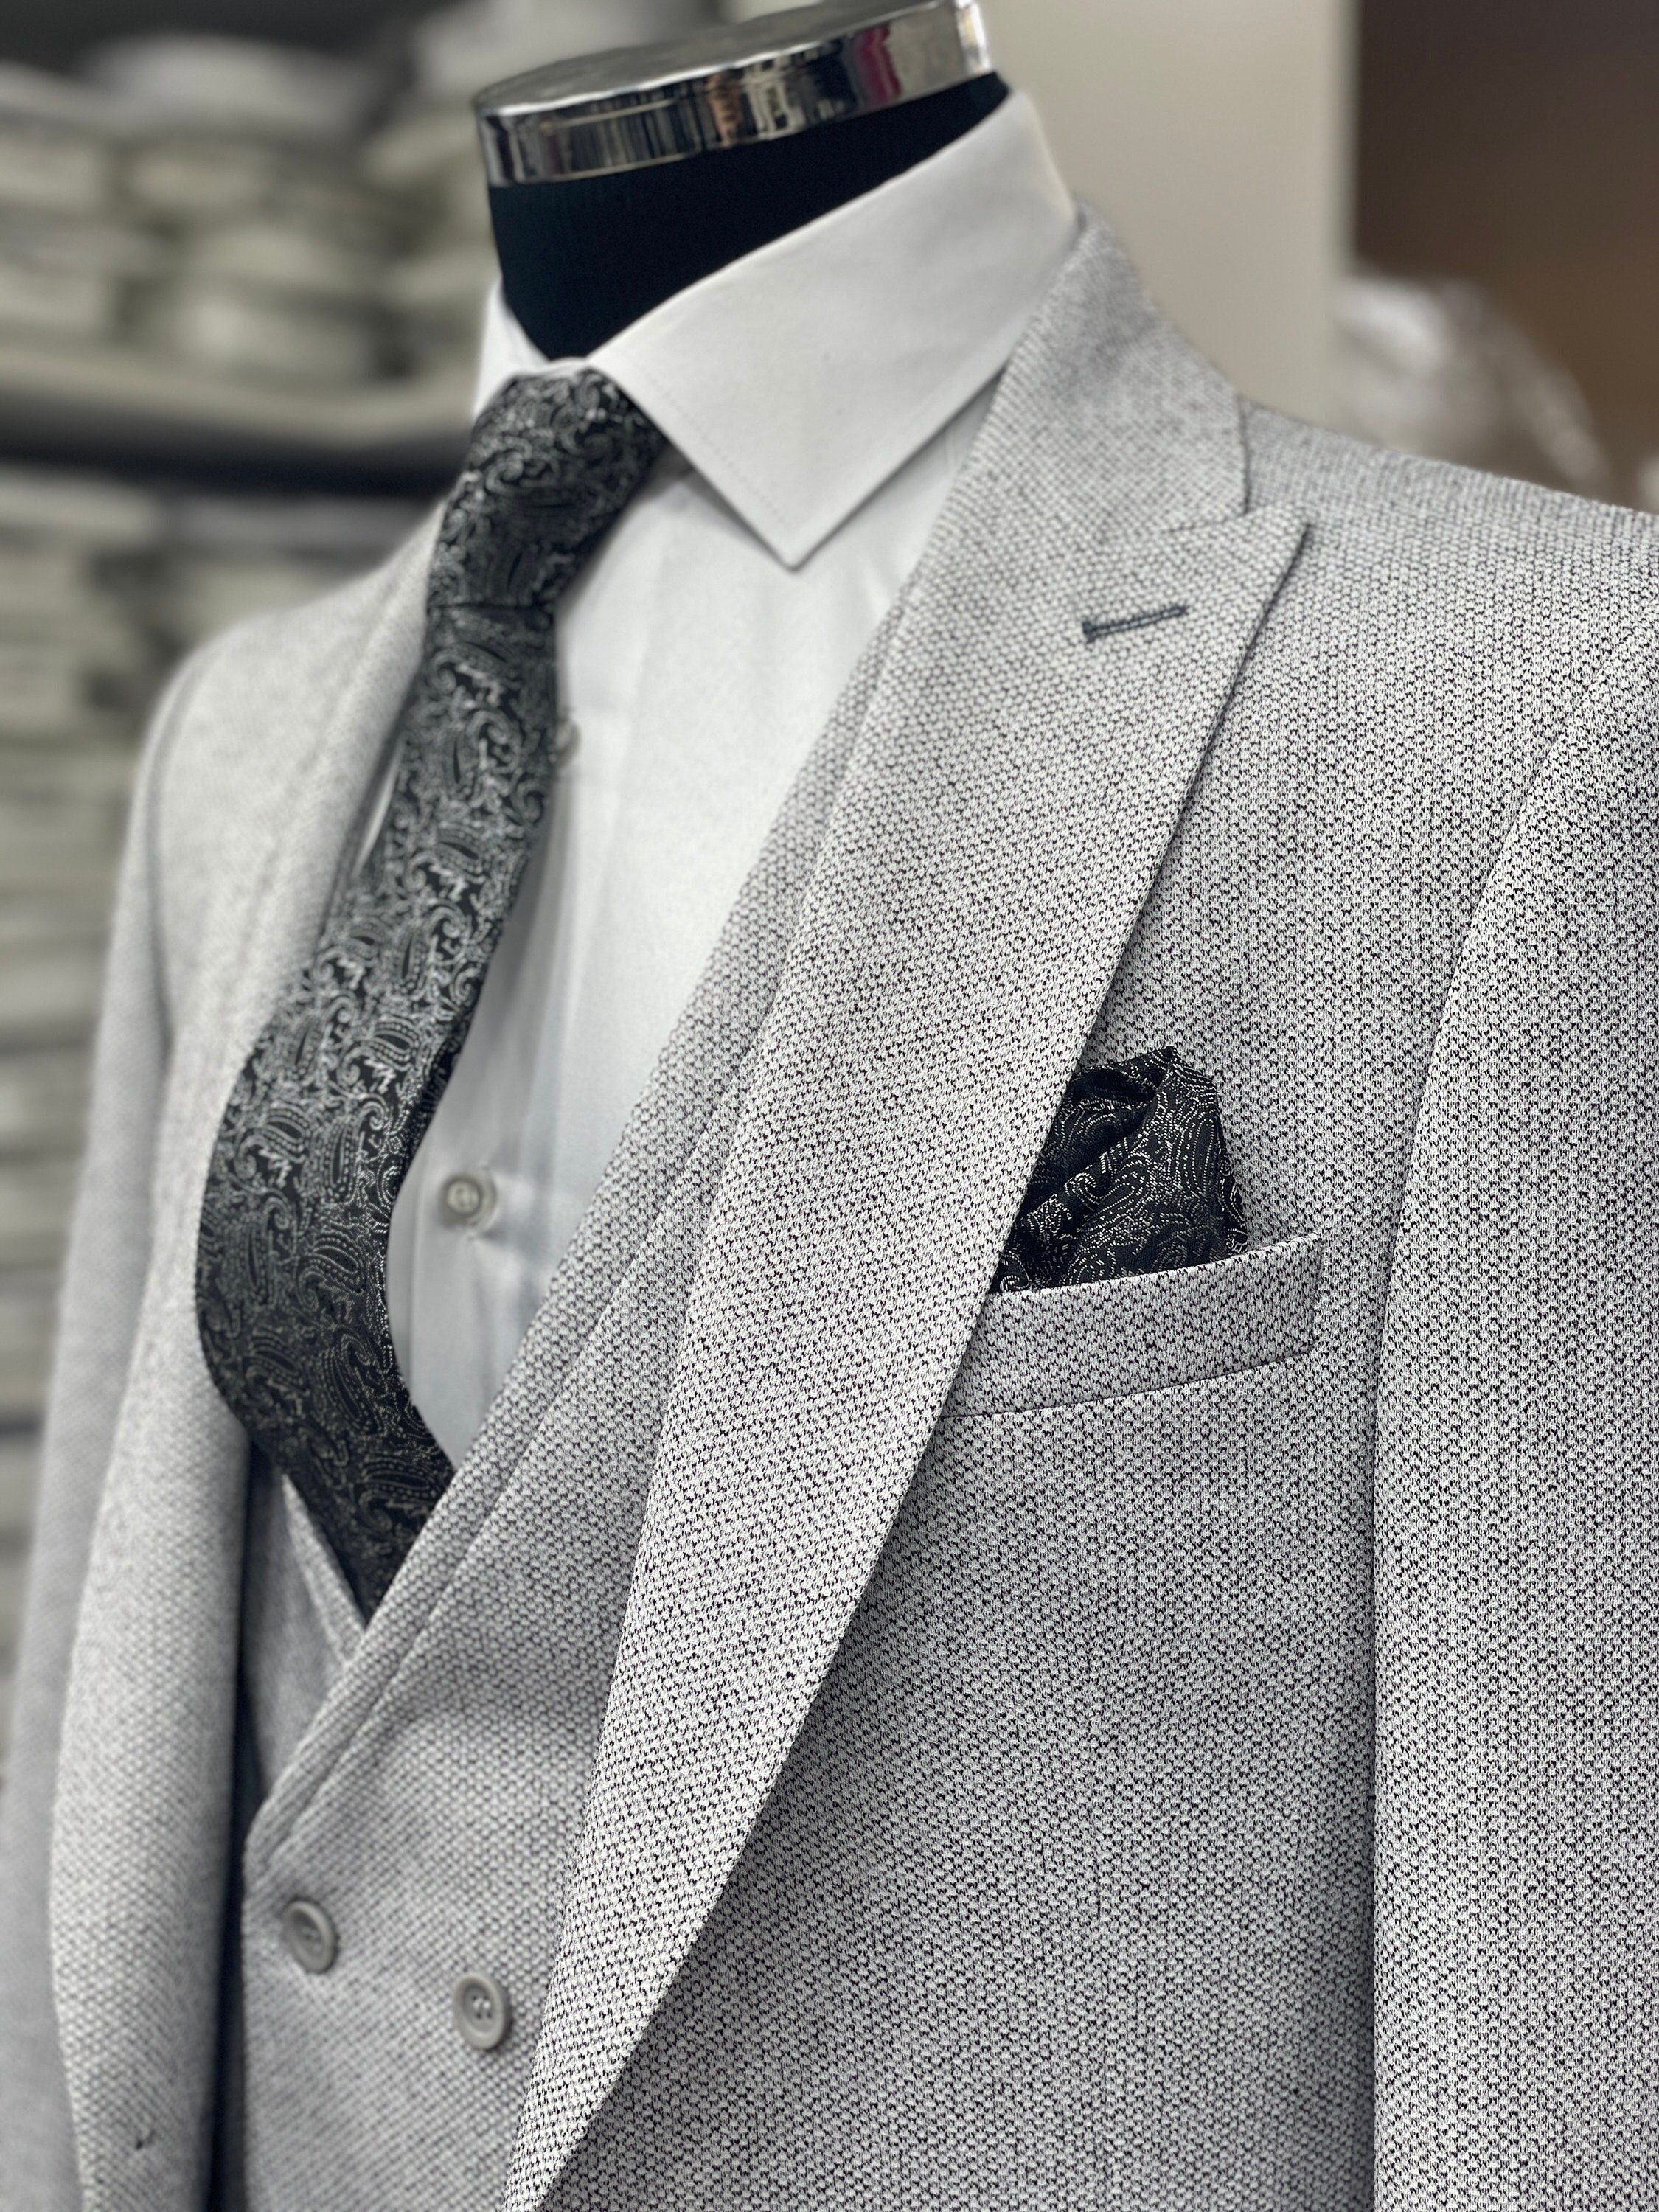 9 New Designs of Grey Vests for Men and Women in Trend